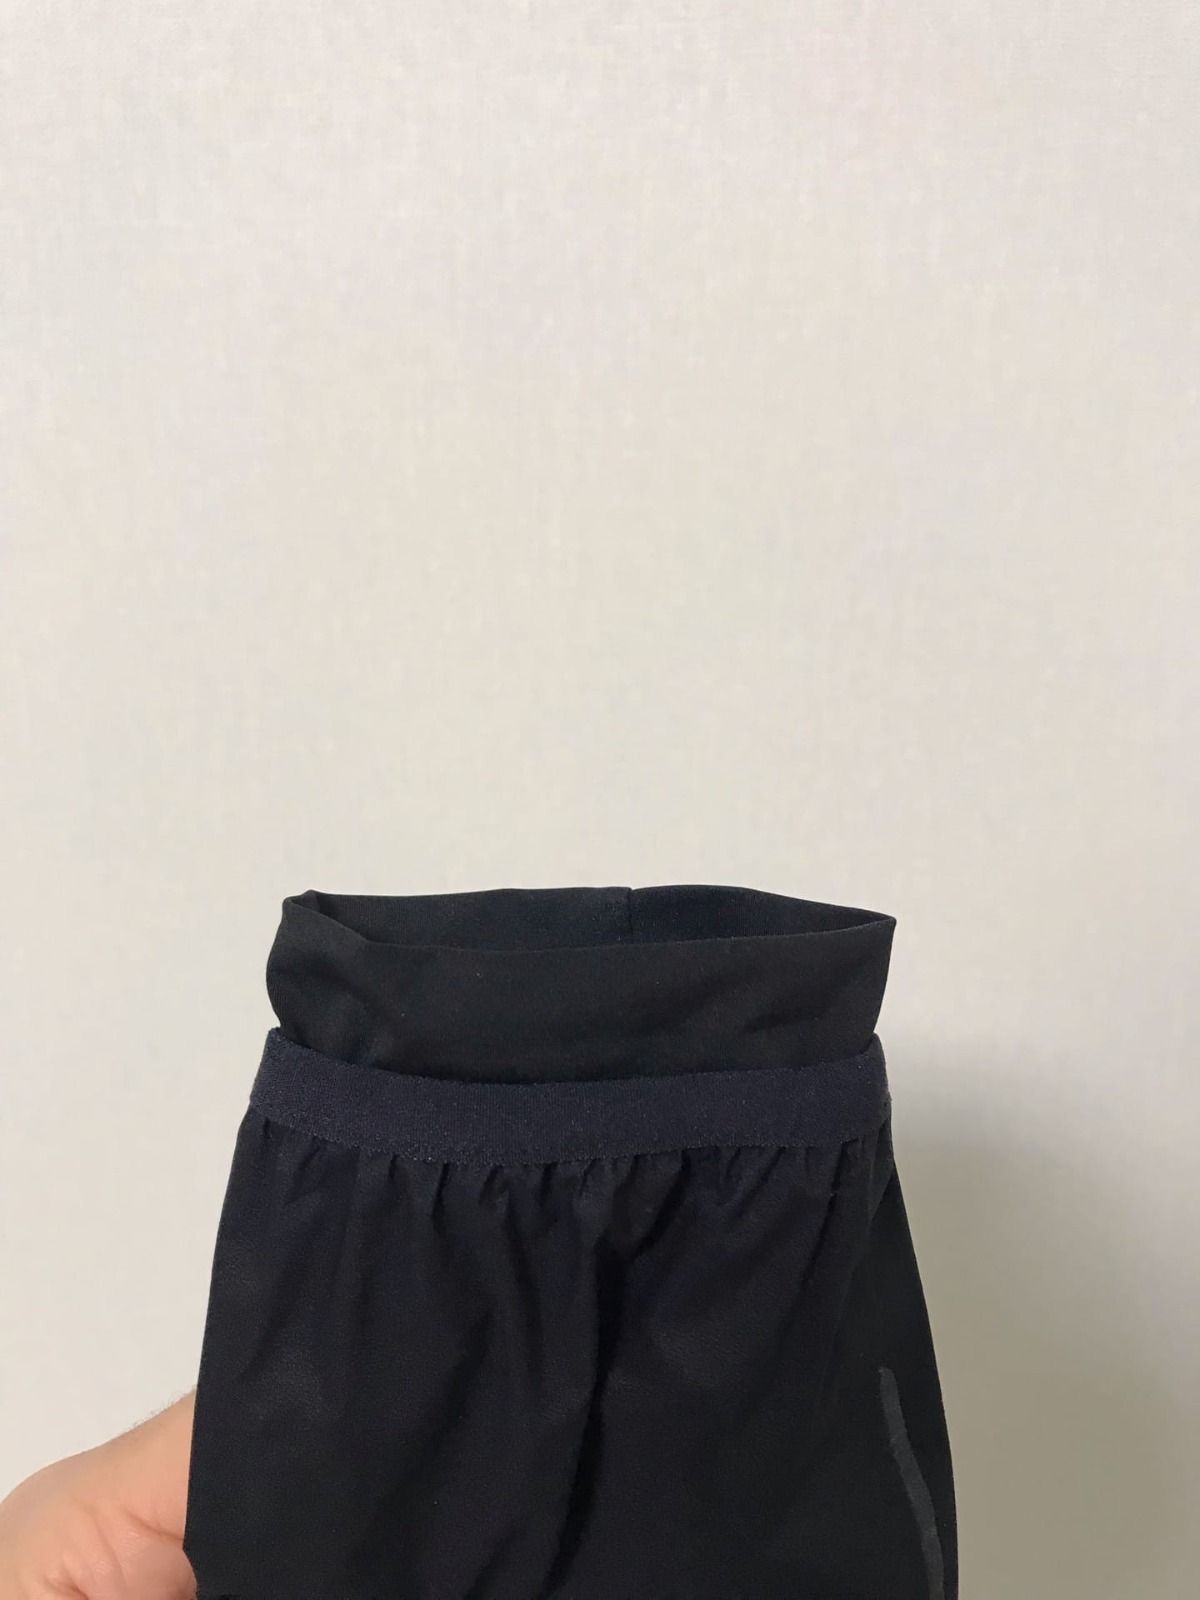 Rapha Core Rain Jacket (Size M)